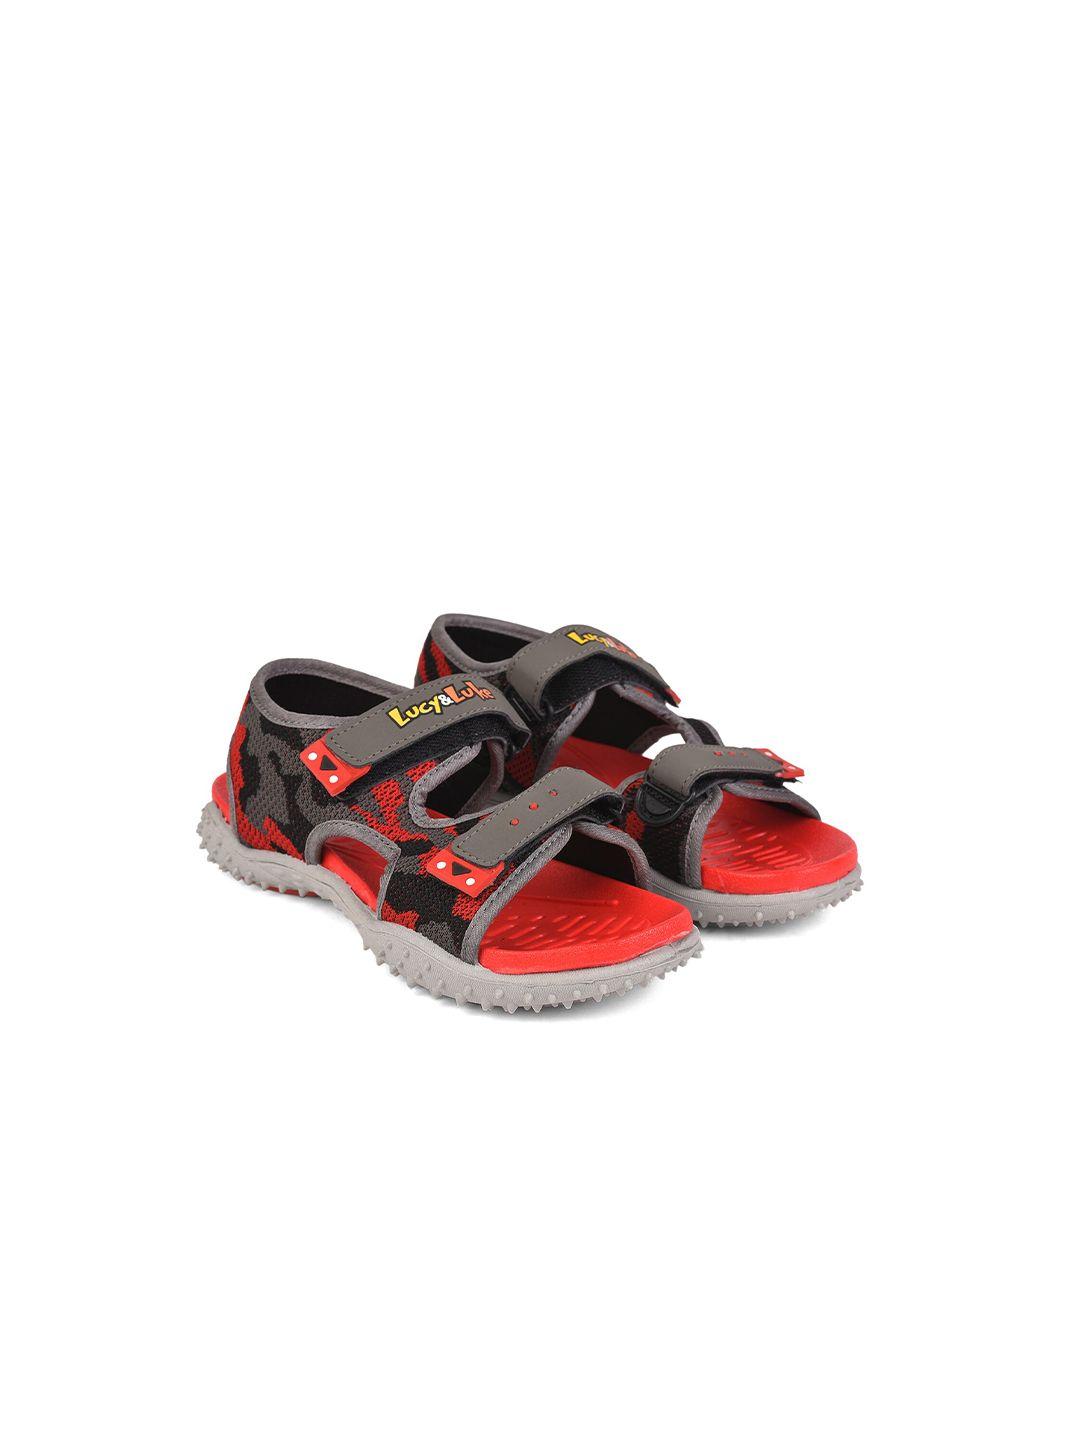 liberty kids red & grey comfort sandals